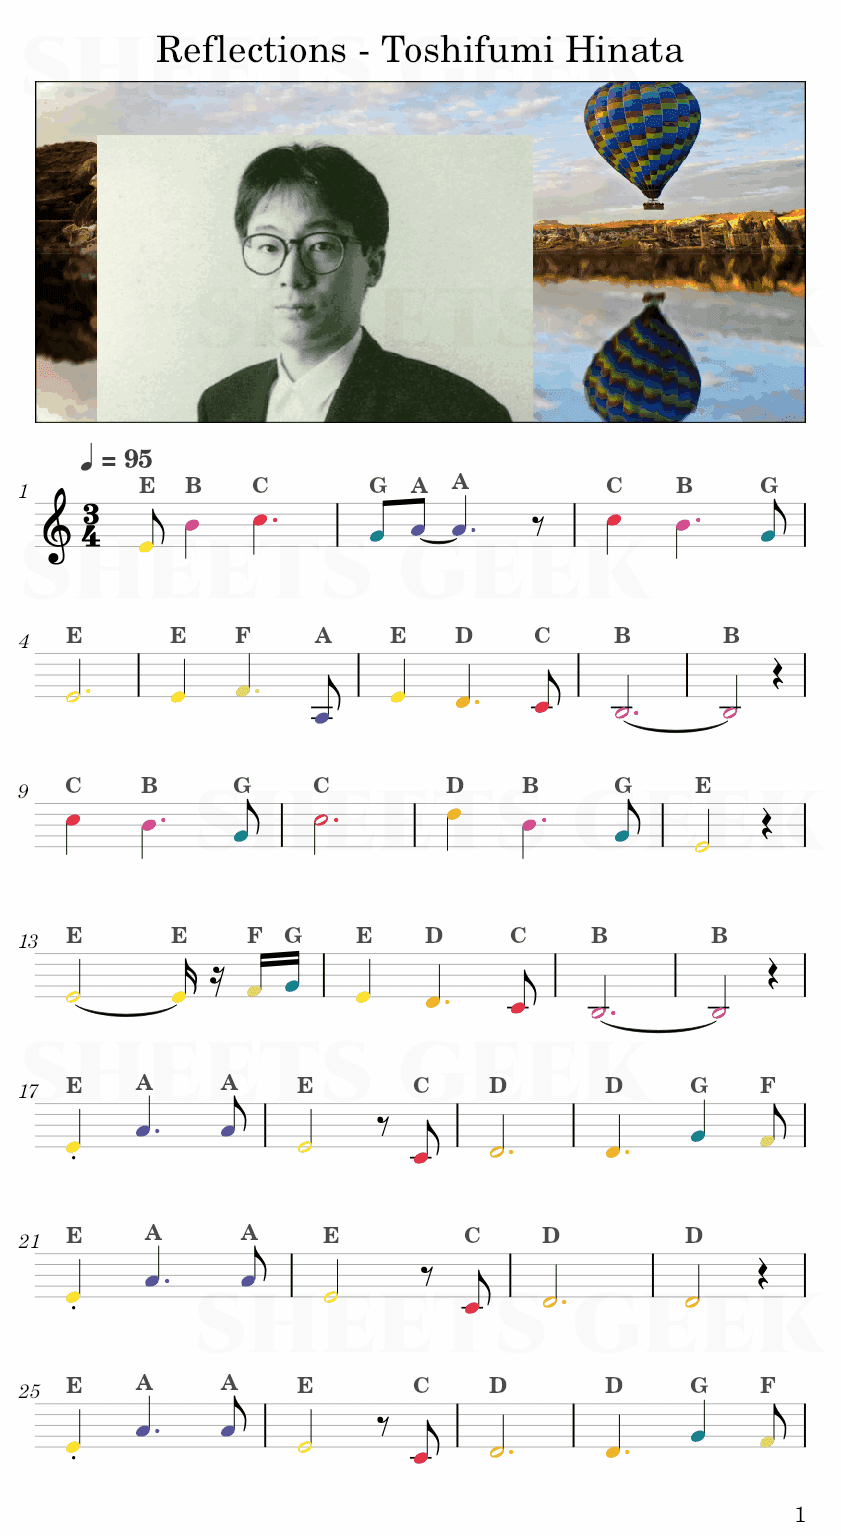 Reflections - Toshifumi Hinata Easy Sheet Music Free for piano, keyboard, flute, violin, sax, cello page 1